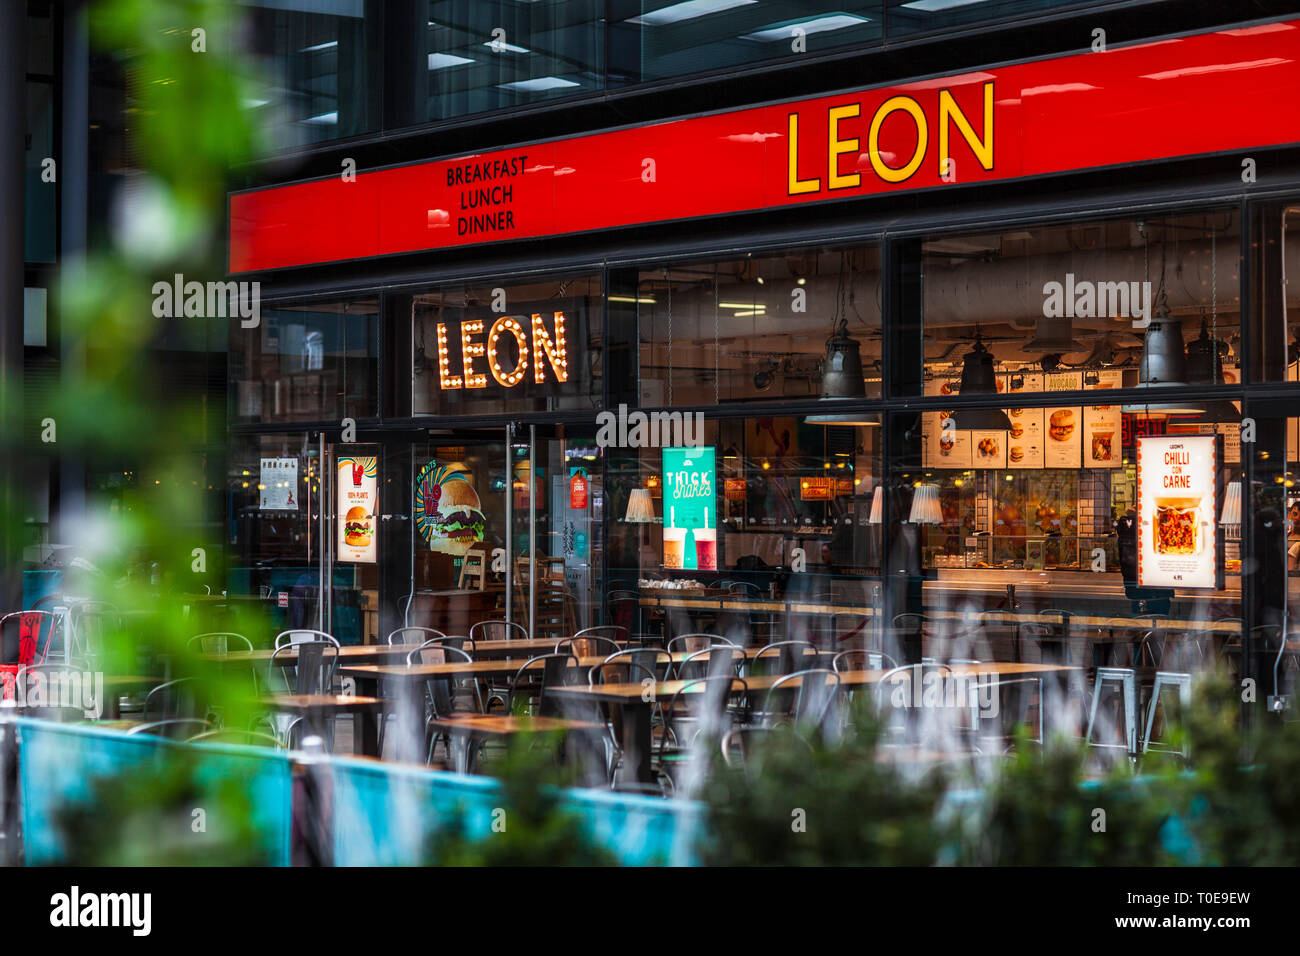 Leon Fast Food Restaurant London - the Leon restaurant in London's Spitalfields Market Stock Photo